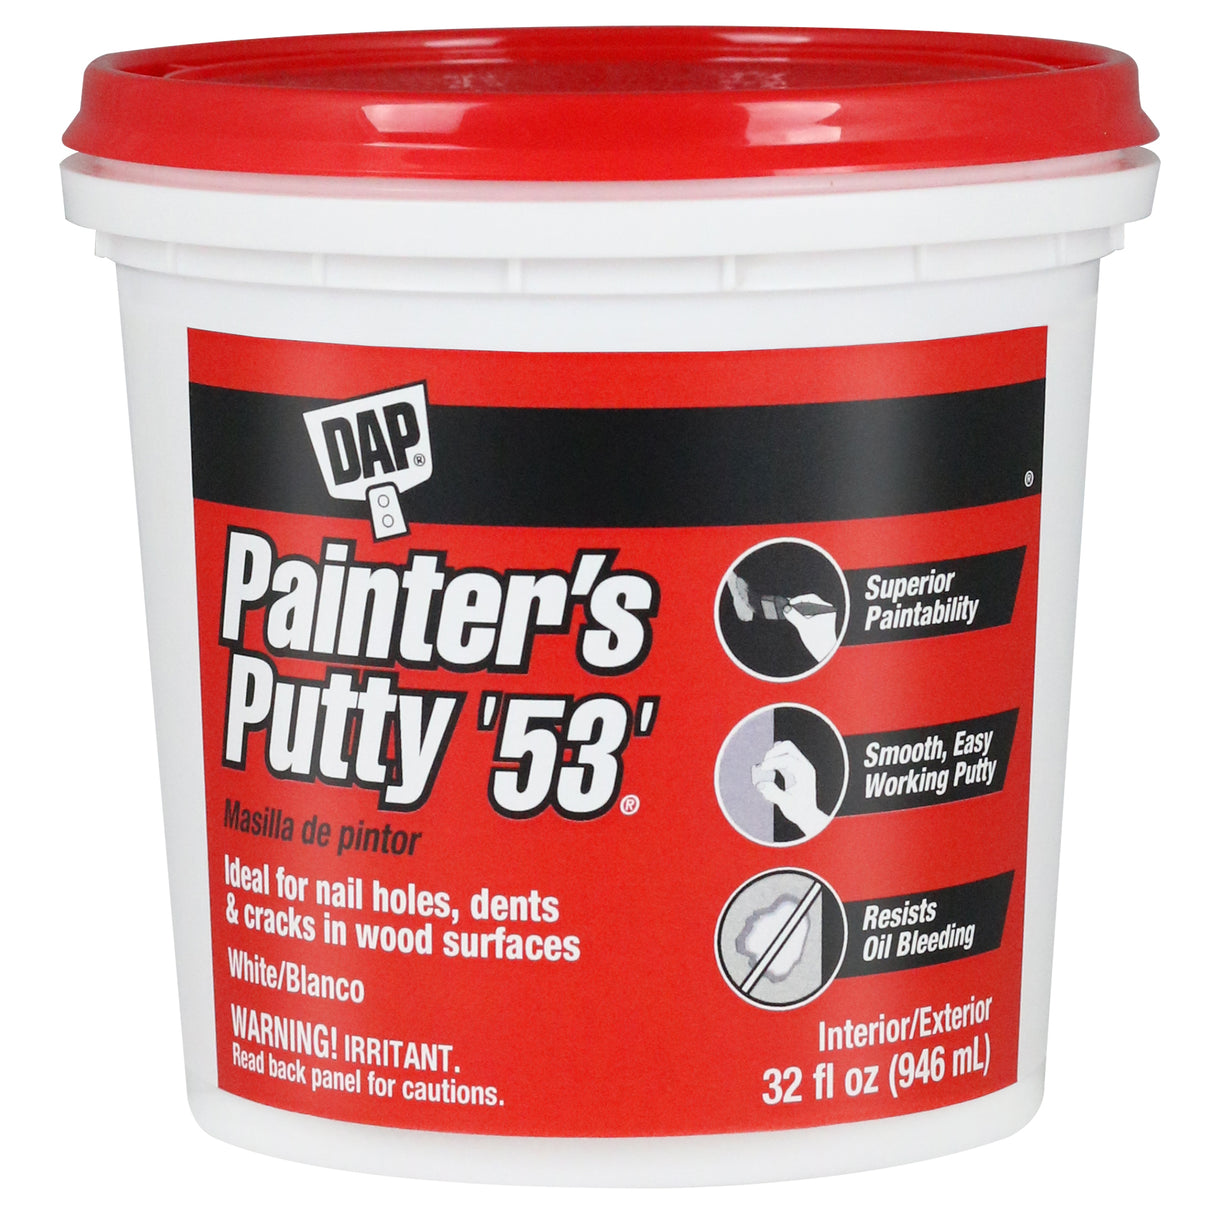 DAP 12244 Painters Putty '53' - 1 Quart (32-fl oz)